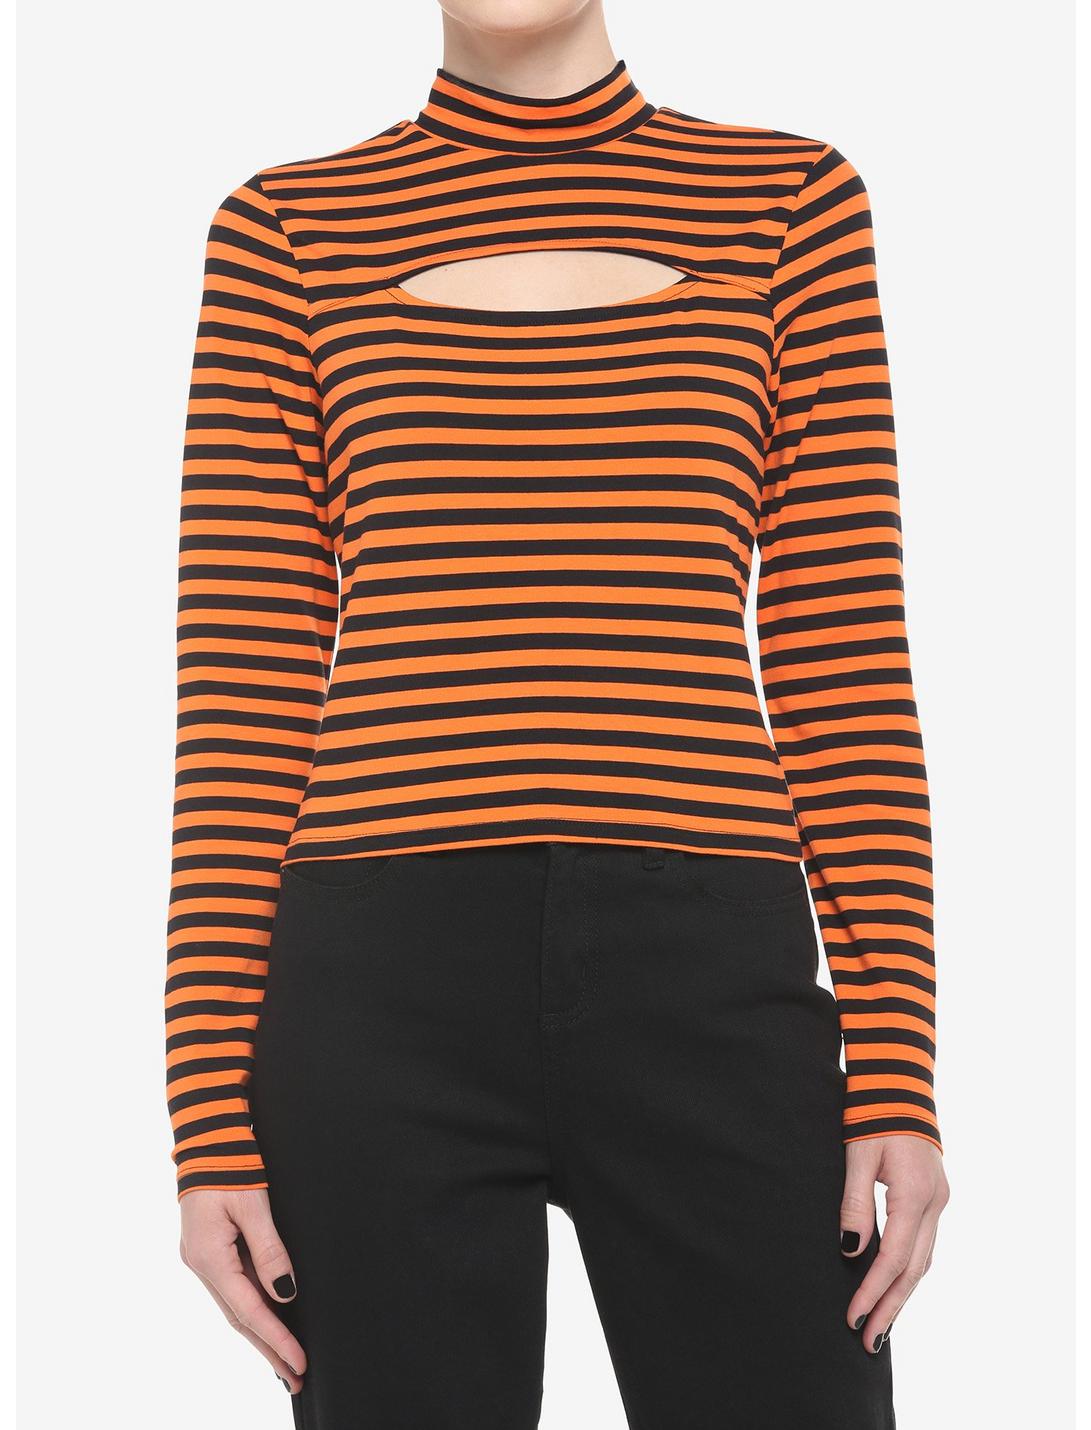 Orange & Black Stripe Cutout Girls Long-Sleeve Top, STRIPES - ORANGE, hi-res